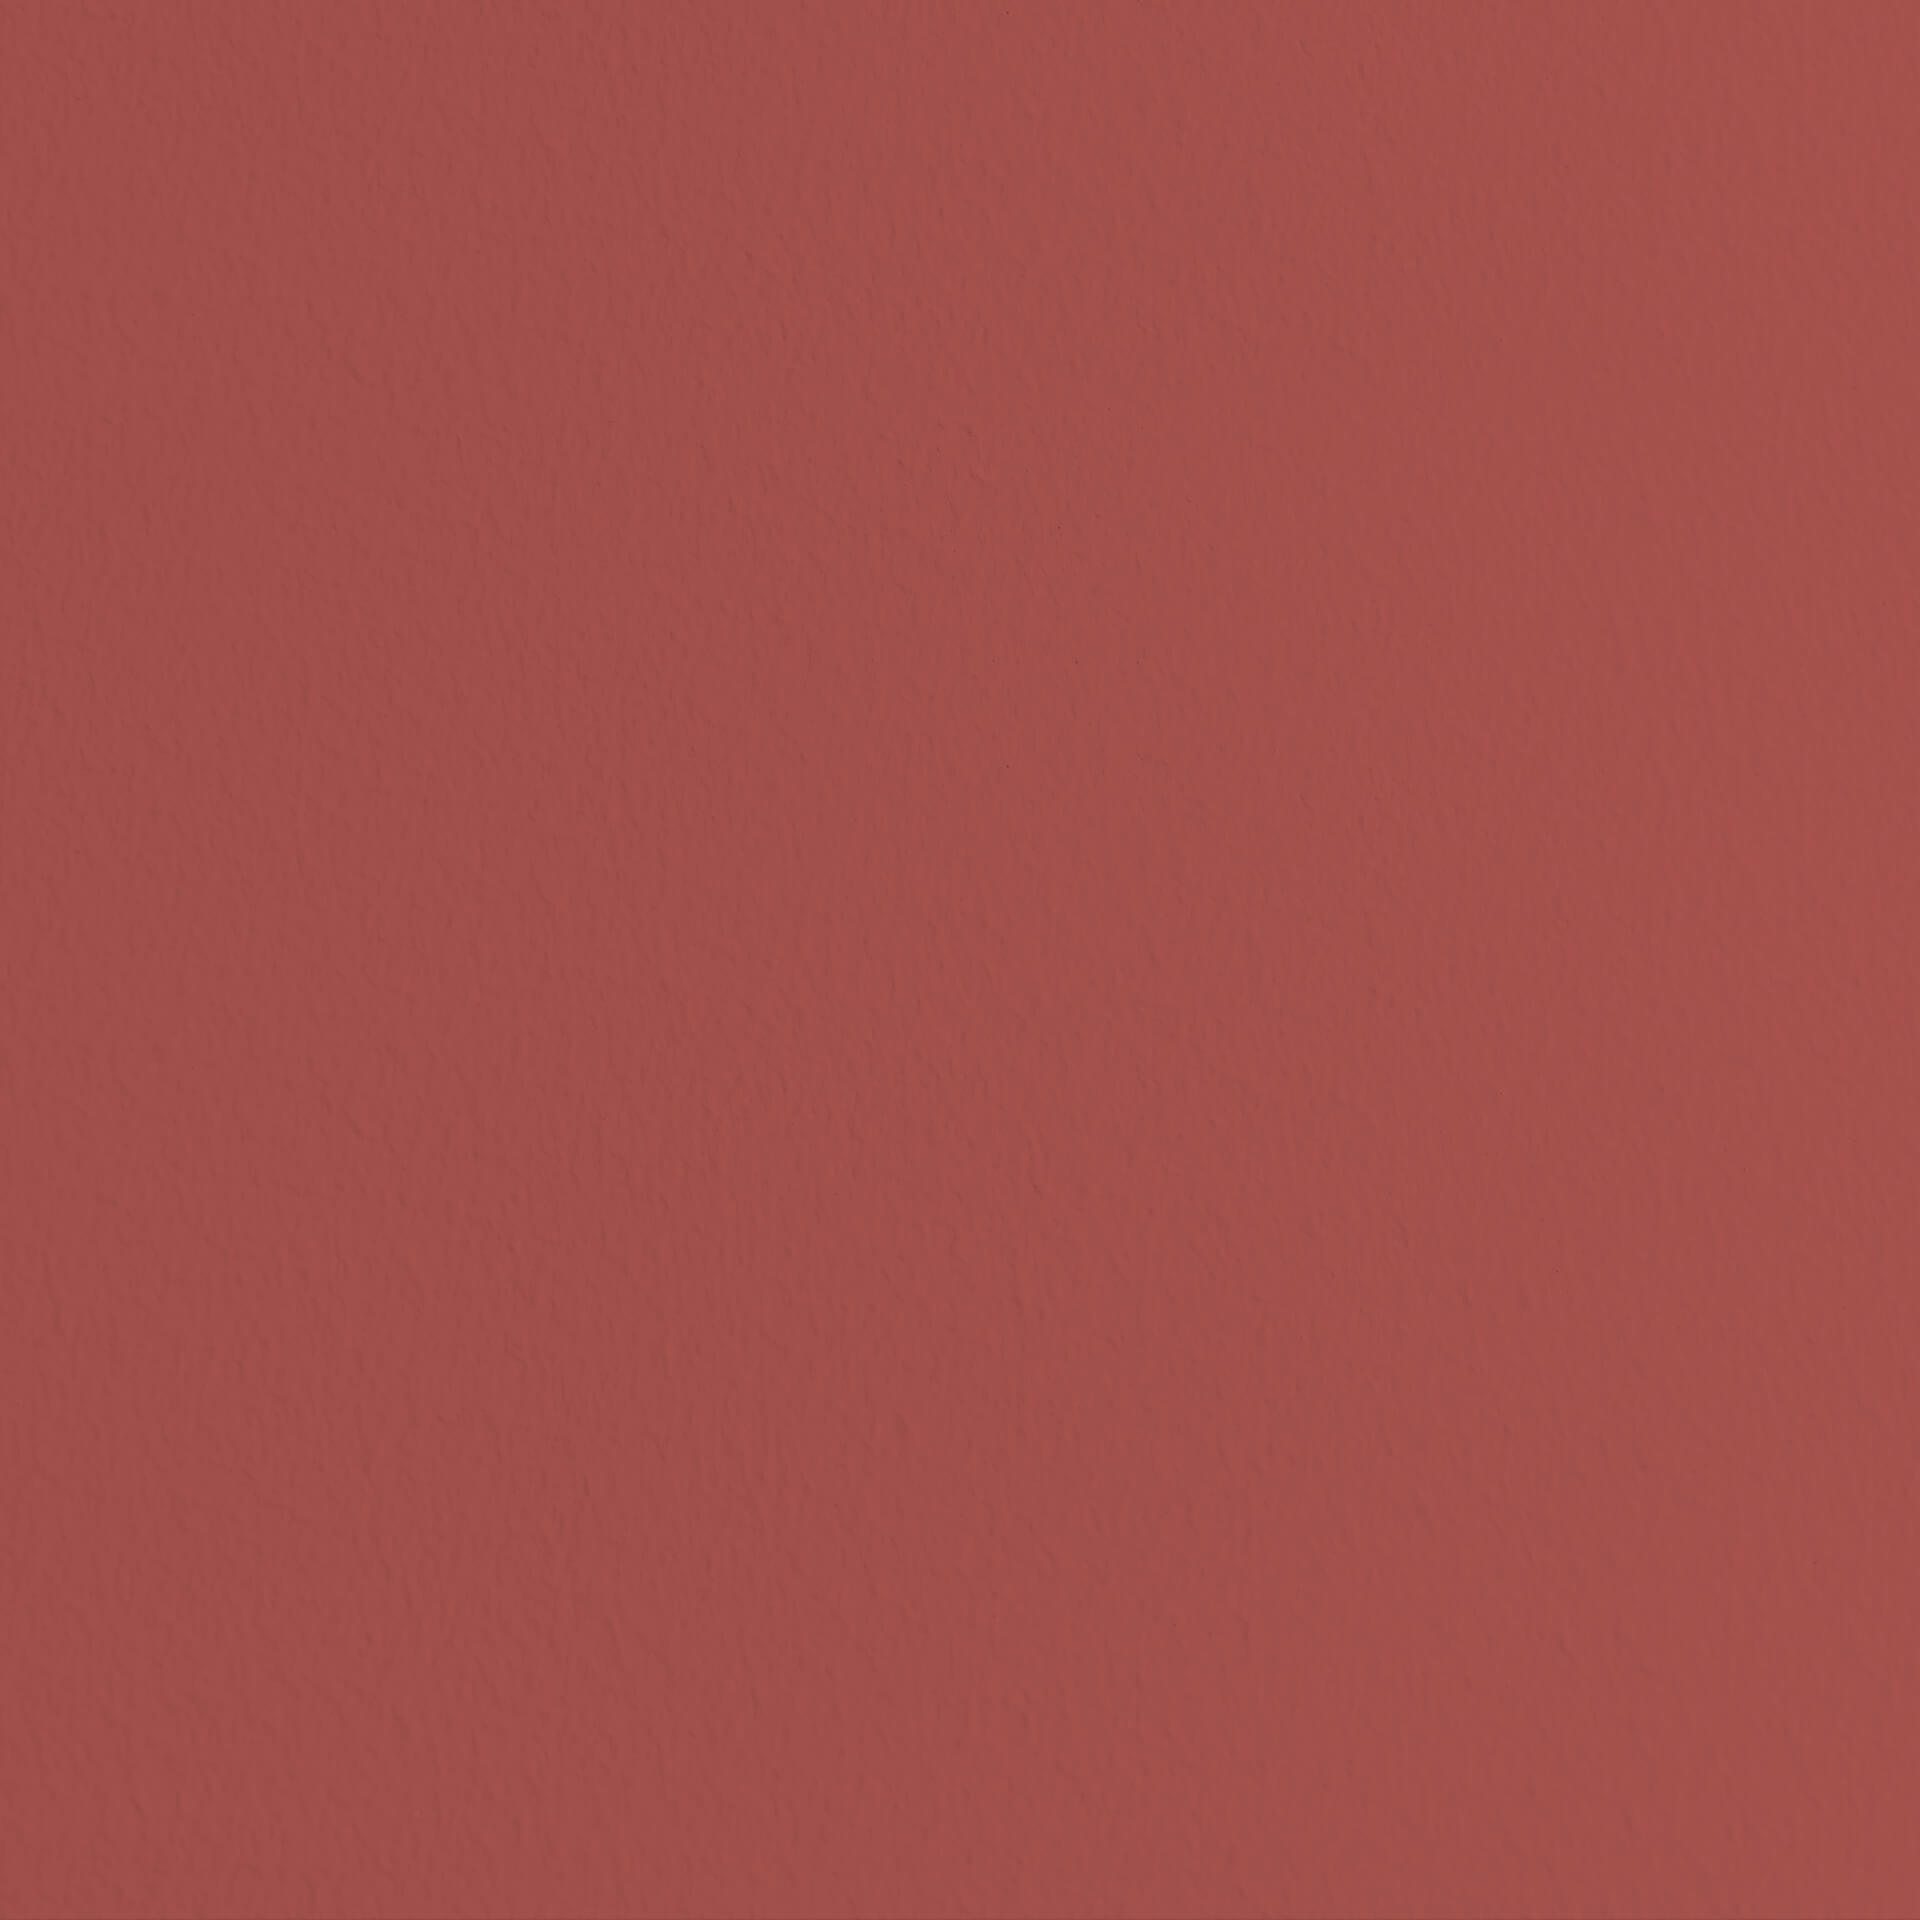 Mylands Mortlake Red No. 290 - Marble Matt Emulsion / Wandfarbe, 1L